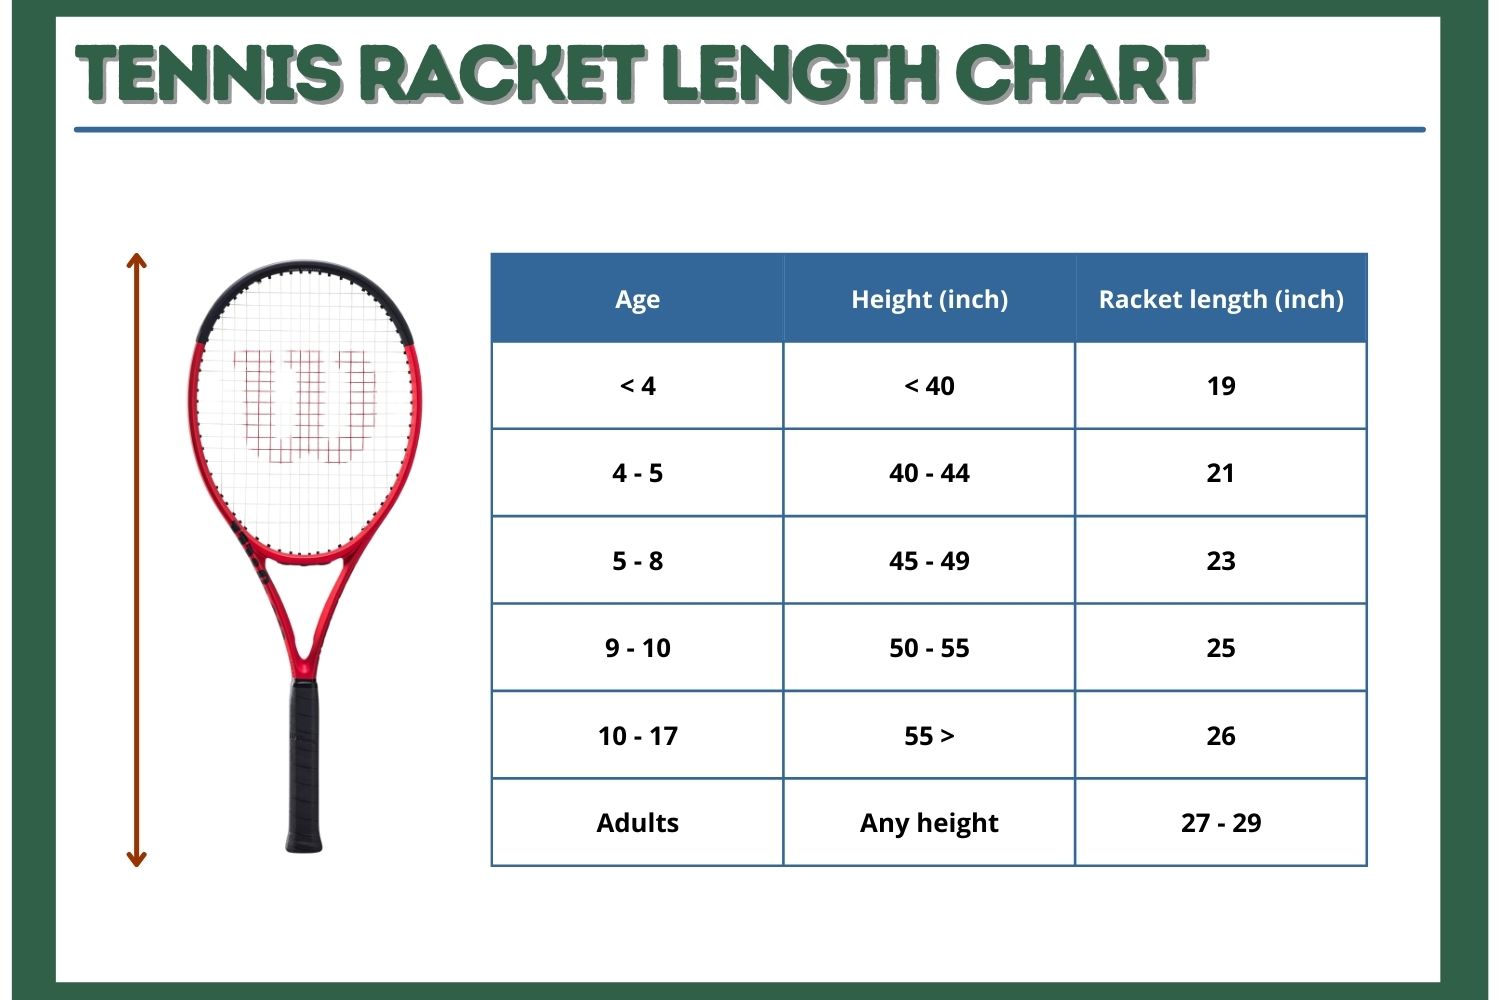 Tennis Racket Size Length Chart 